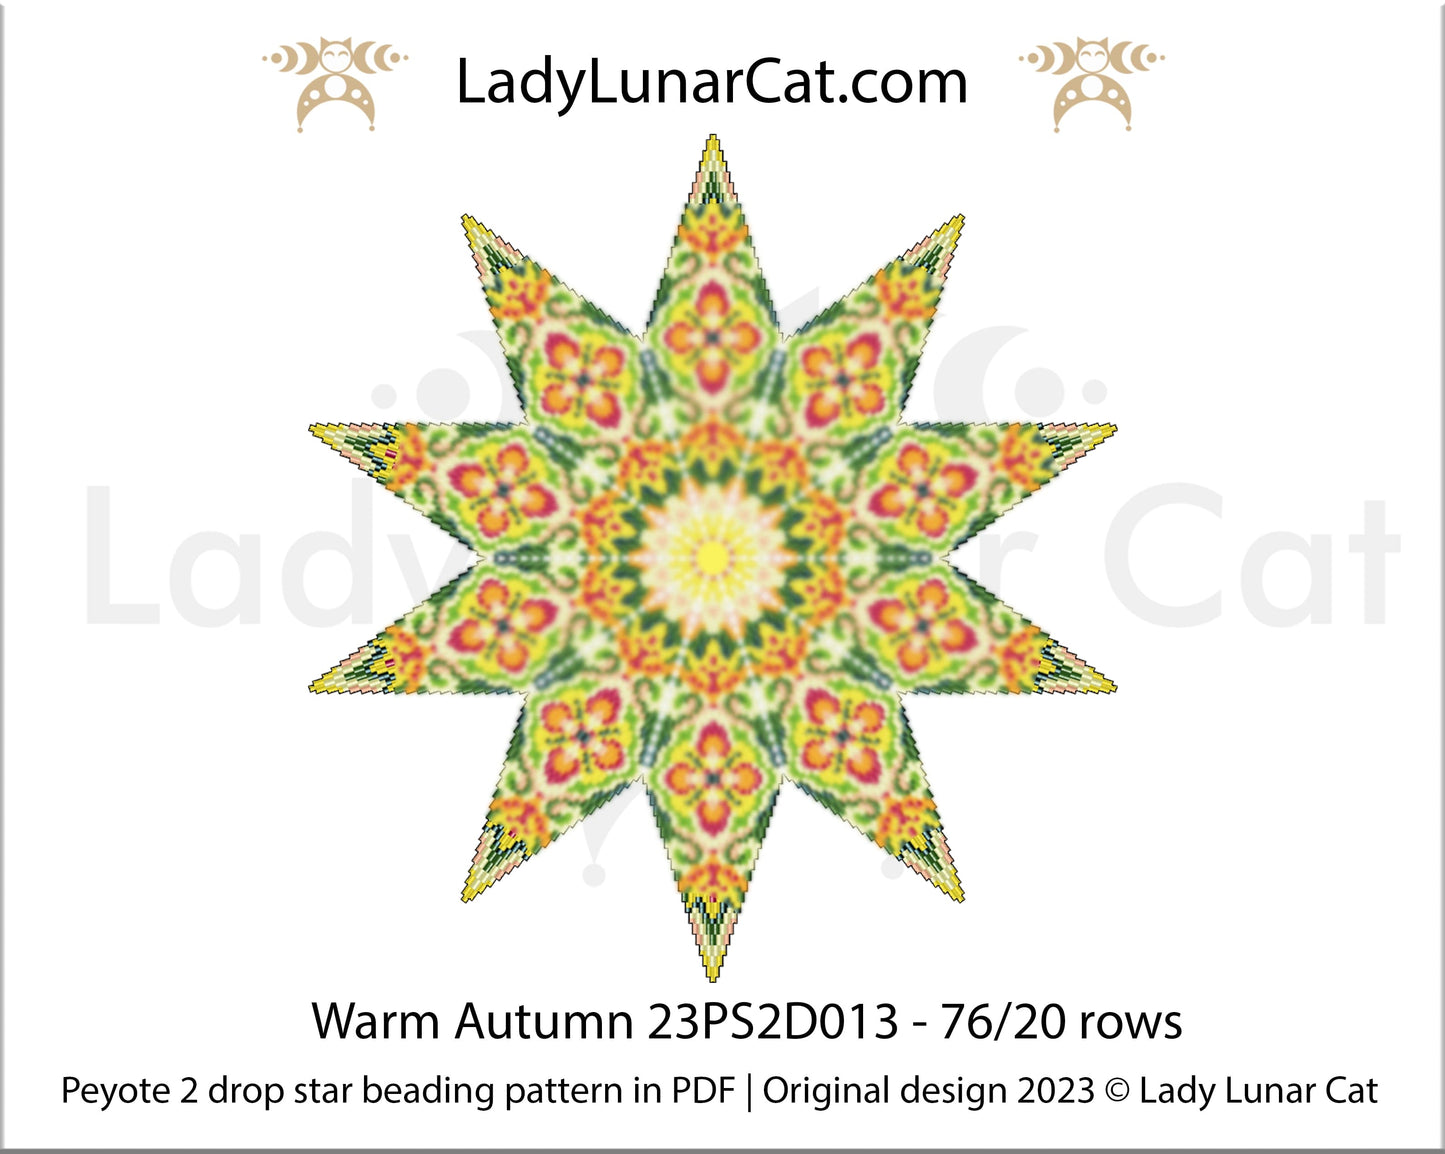 Peyote 2 drop star pattern for beading - Warm Autumn 23PS2D013 20 rows + Basic star 2 drop LadyLunarCat